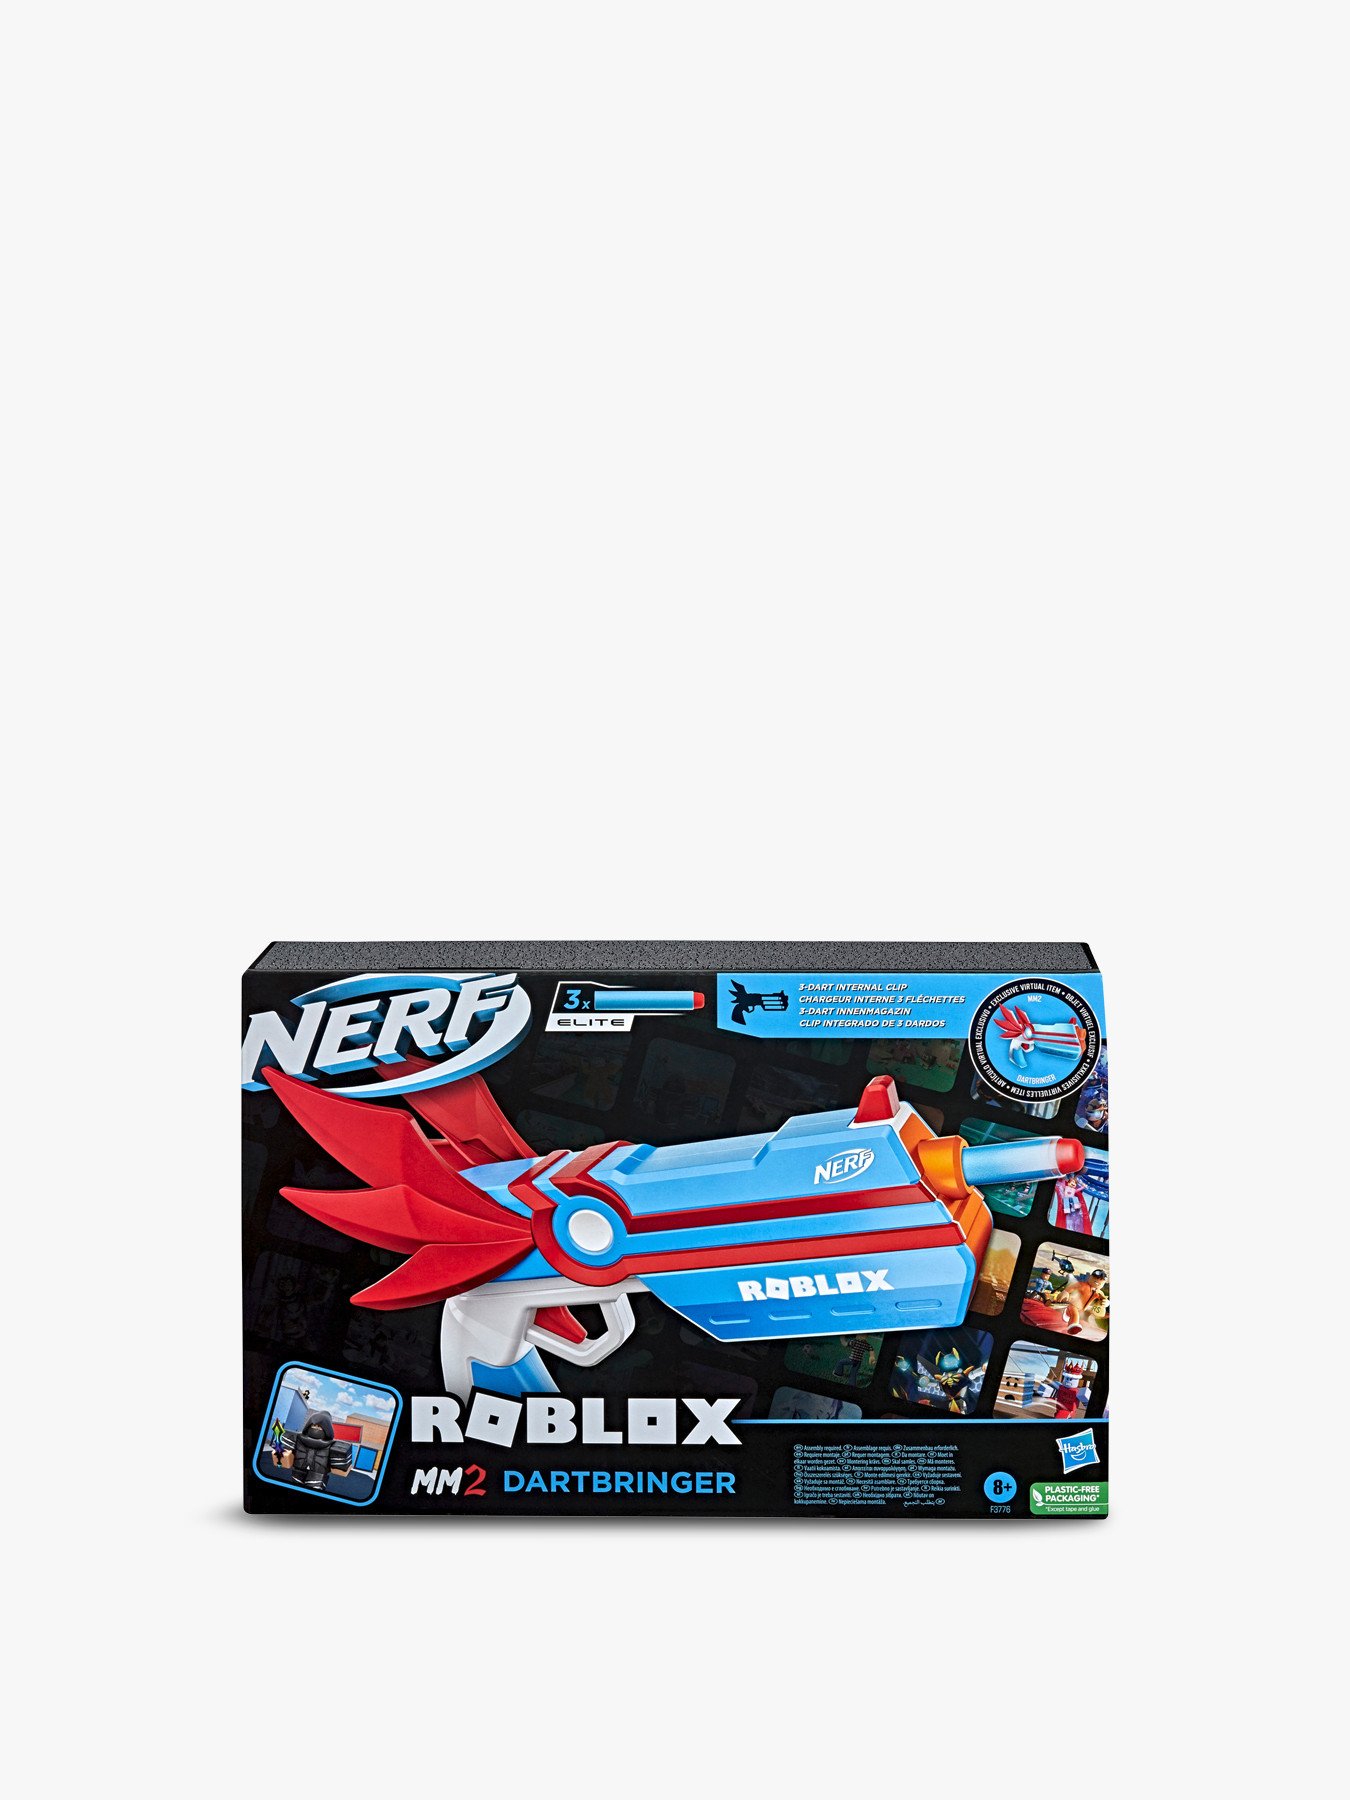 Nerf Nerf Roblox MM2: Dartbringer Dart Blaster, Scooters & Outdoor Toys